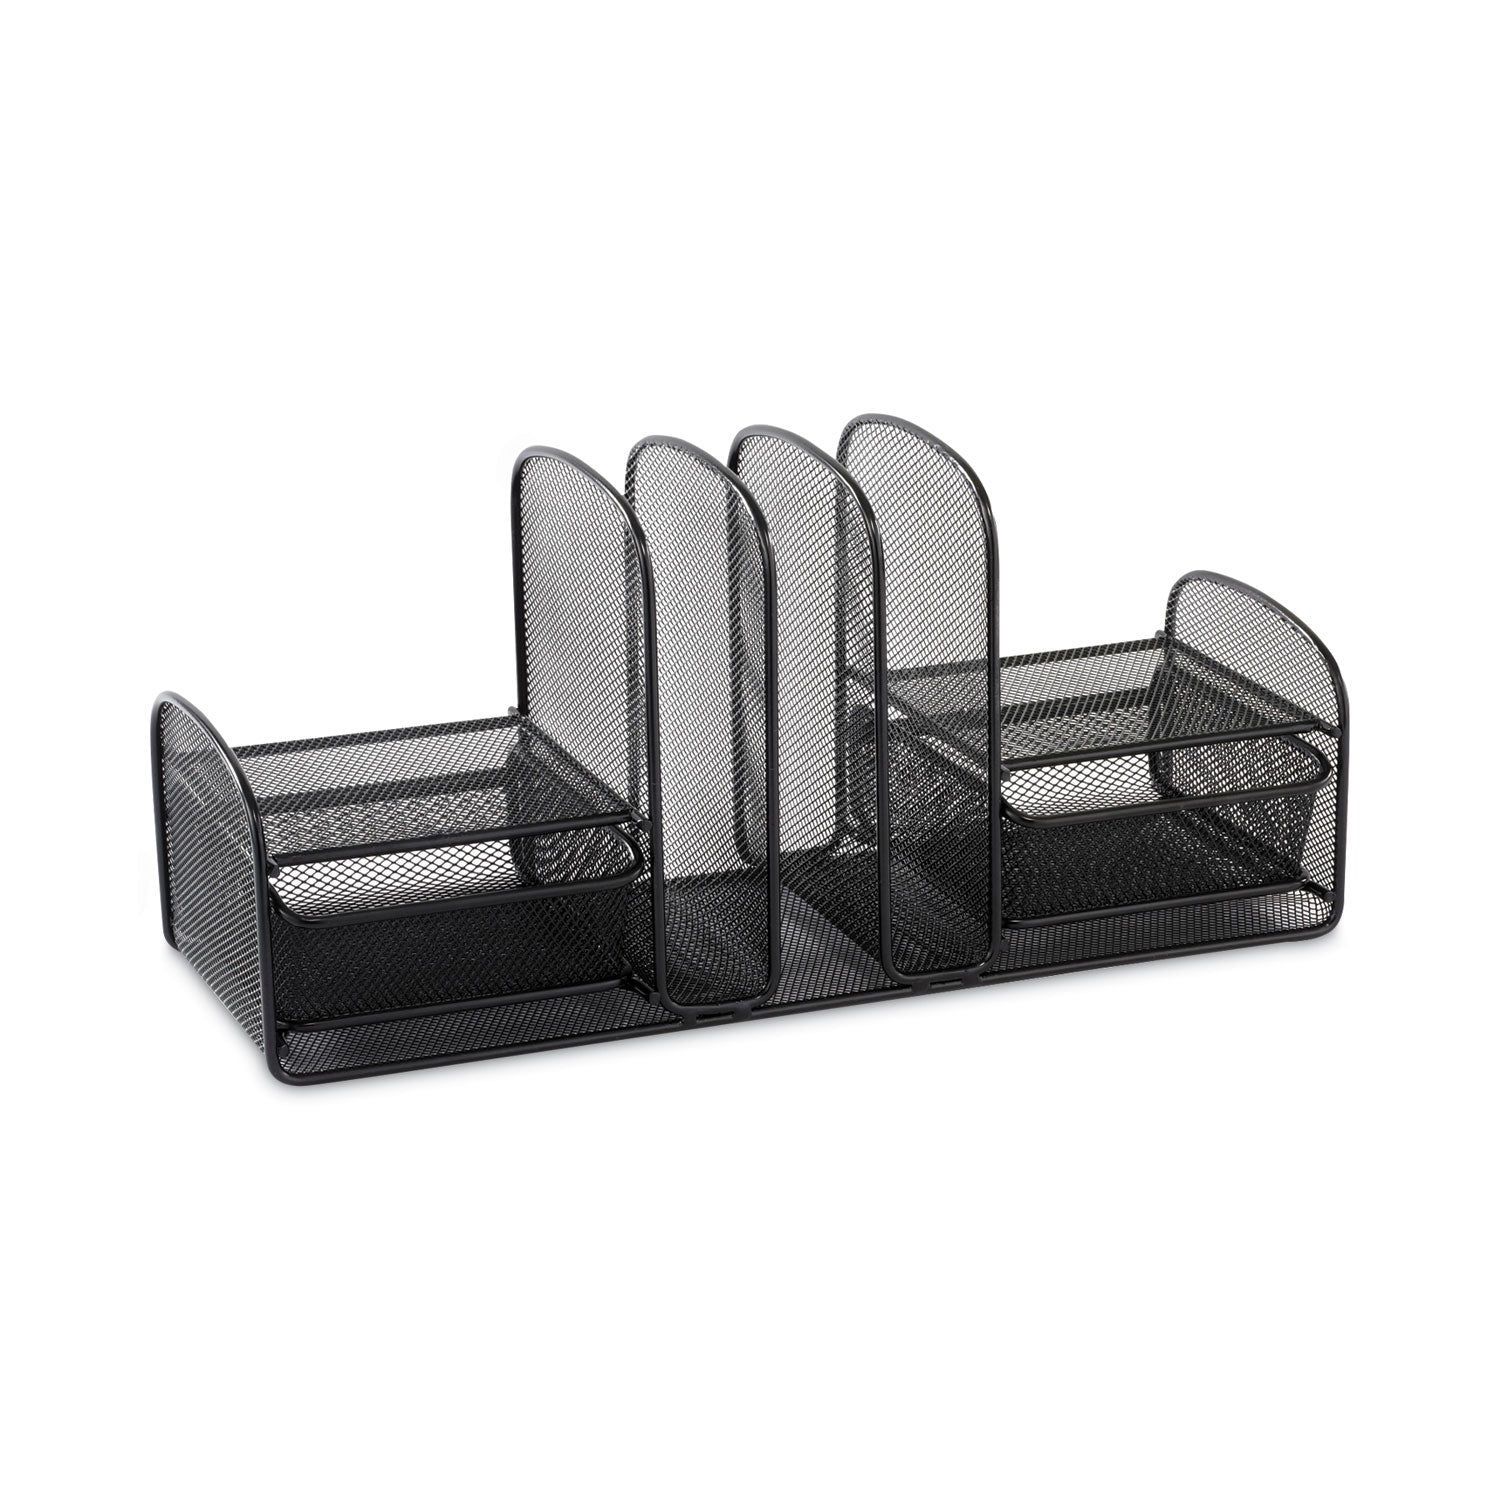 Onyx Mesh Desk Organizer, Three Sections/Two Baskets, Steel Mesh, 17 x 6.75 x 7.75, Black - 